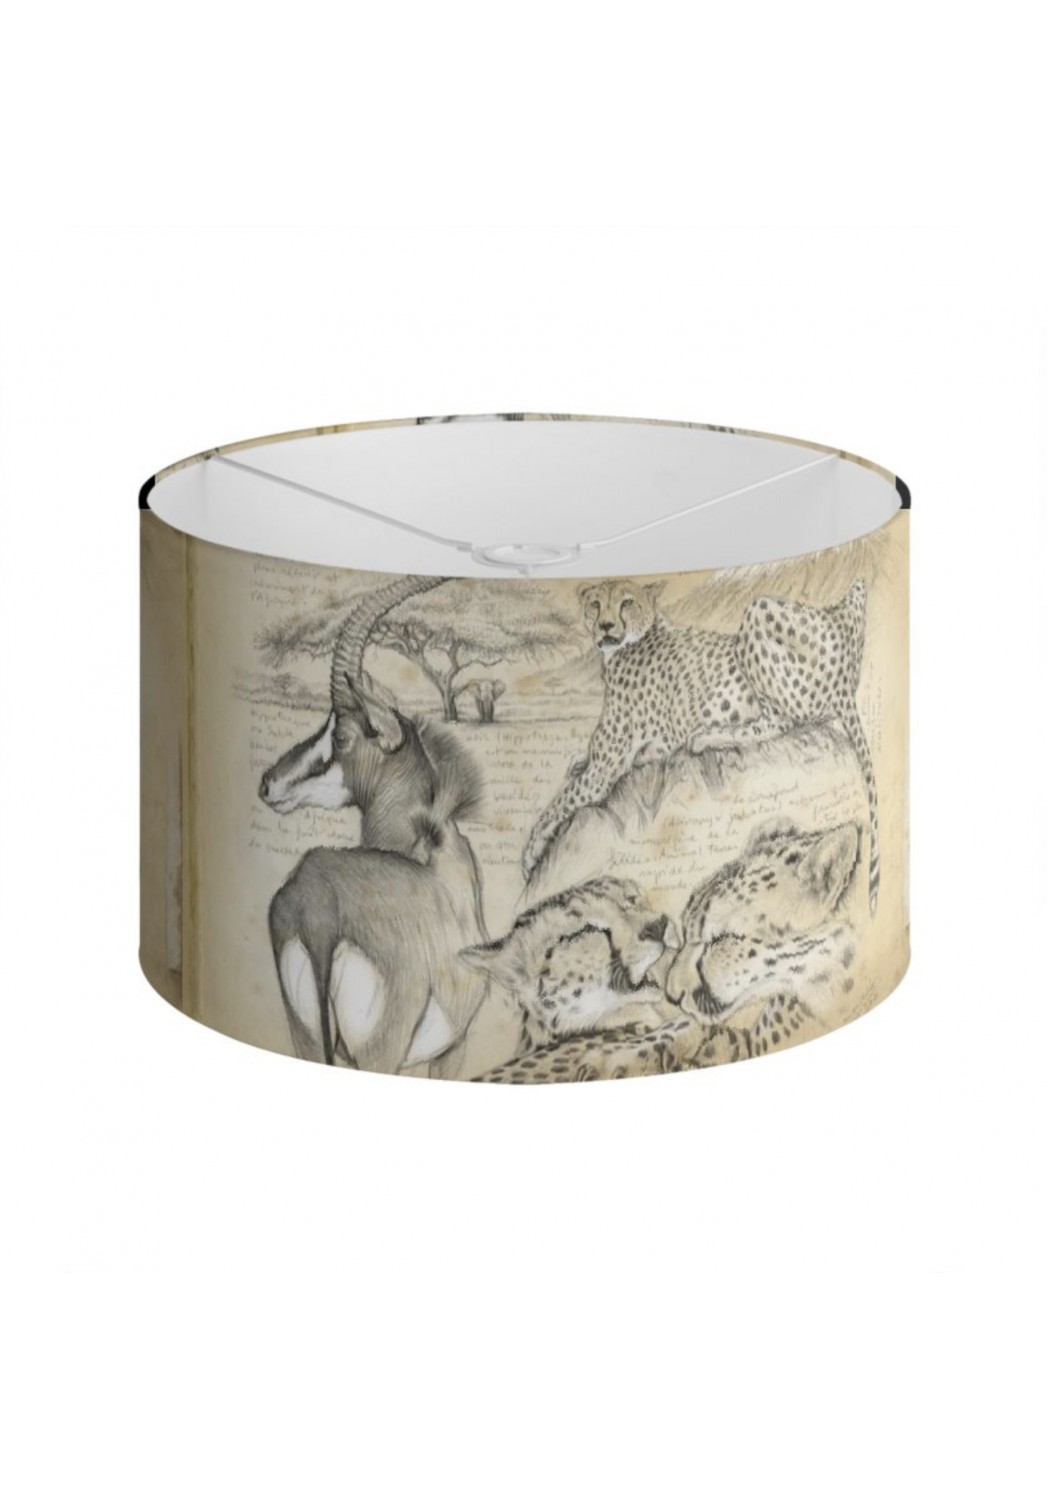 Marcello-art: Decoration accessoiries Lampshade 363 Cheetah and sable antelope